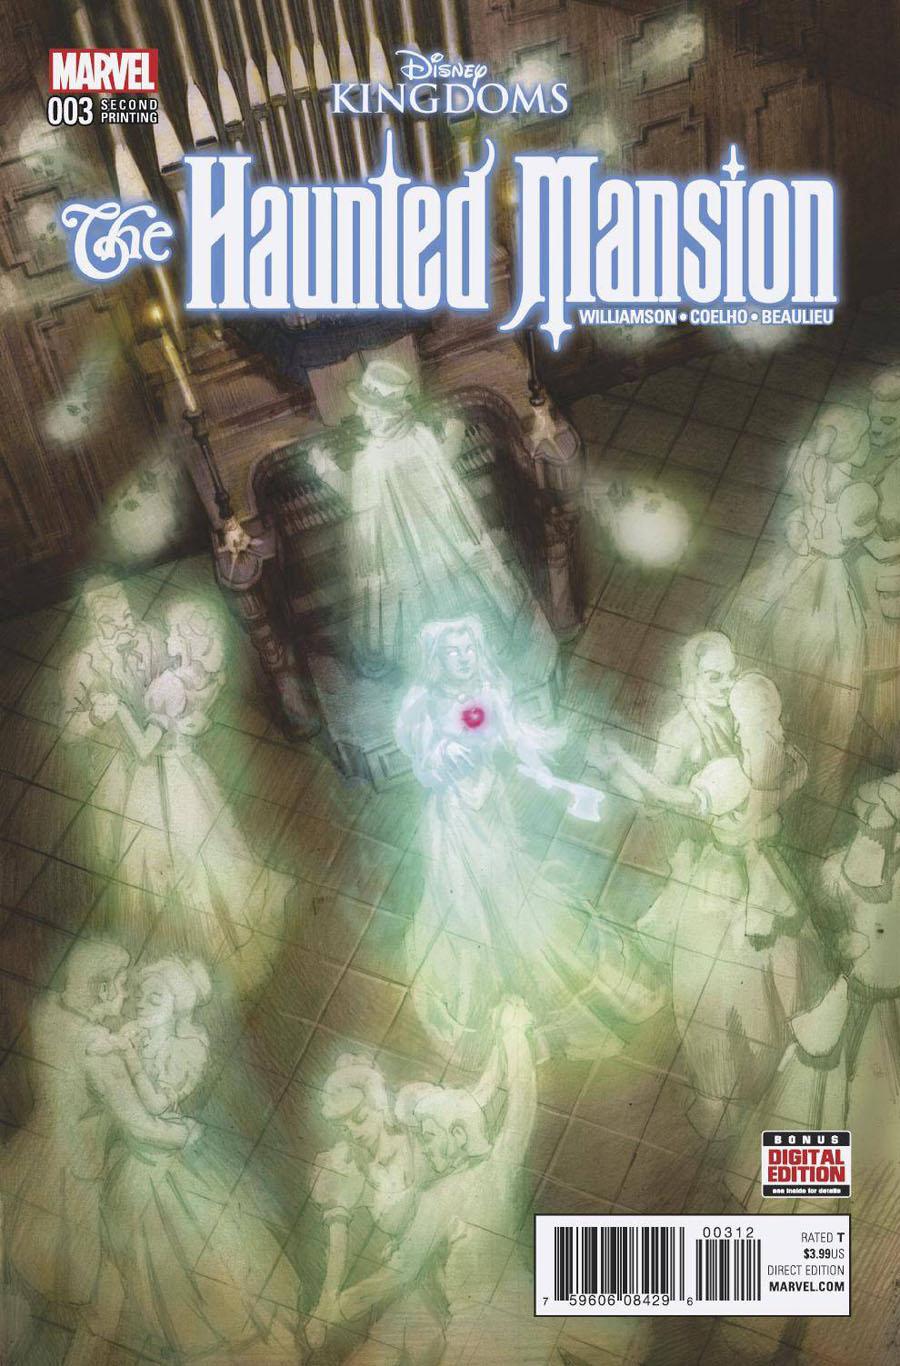 Disney Kingdoms Haunted Mansion Vol. 1 #3